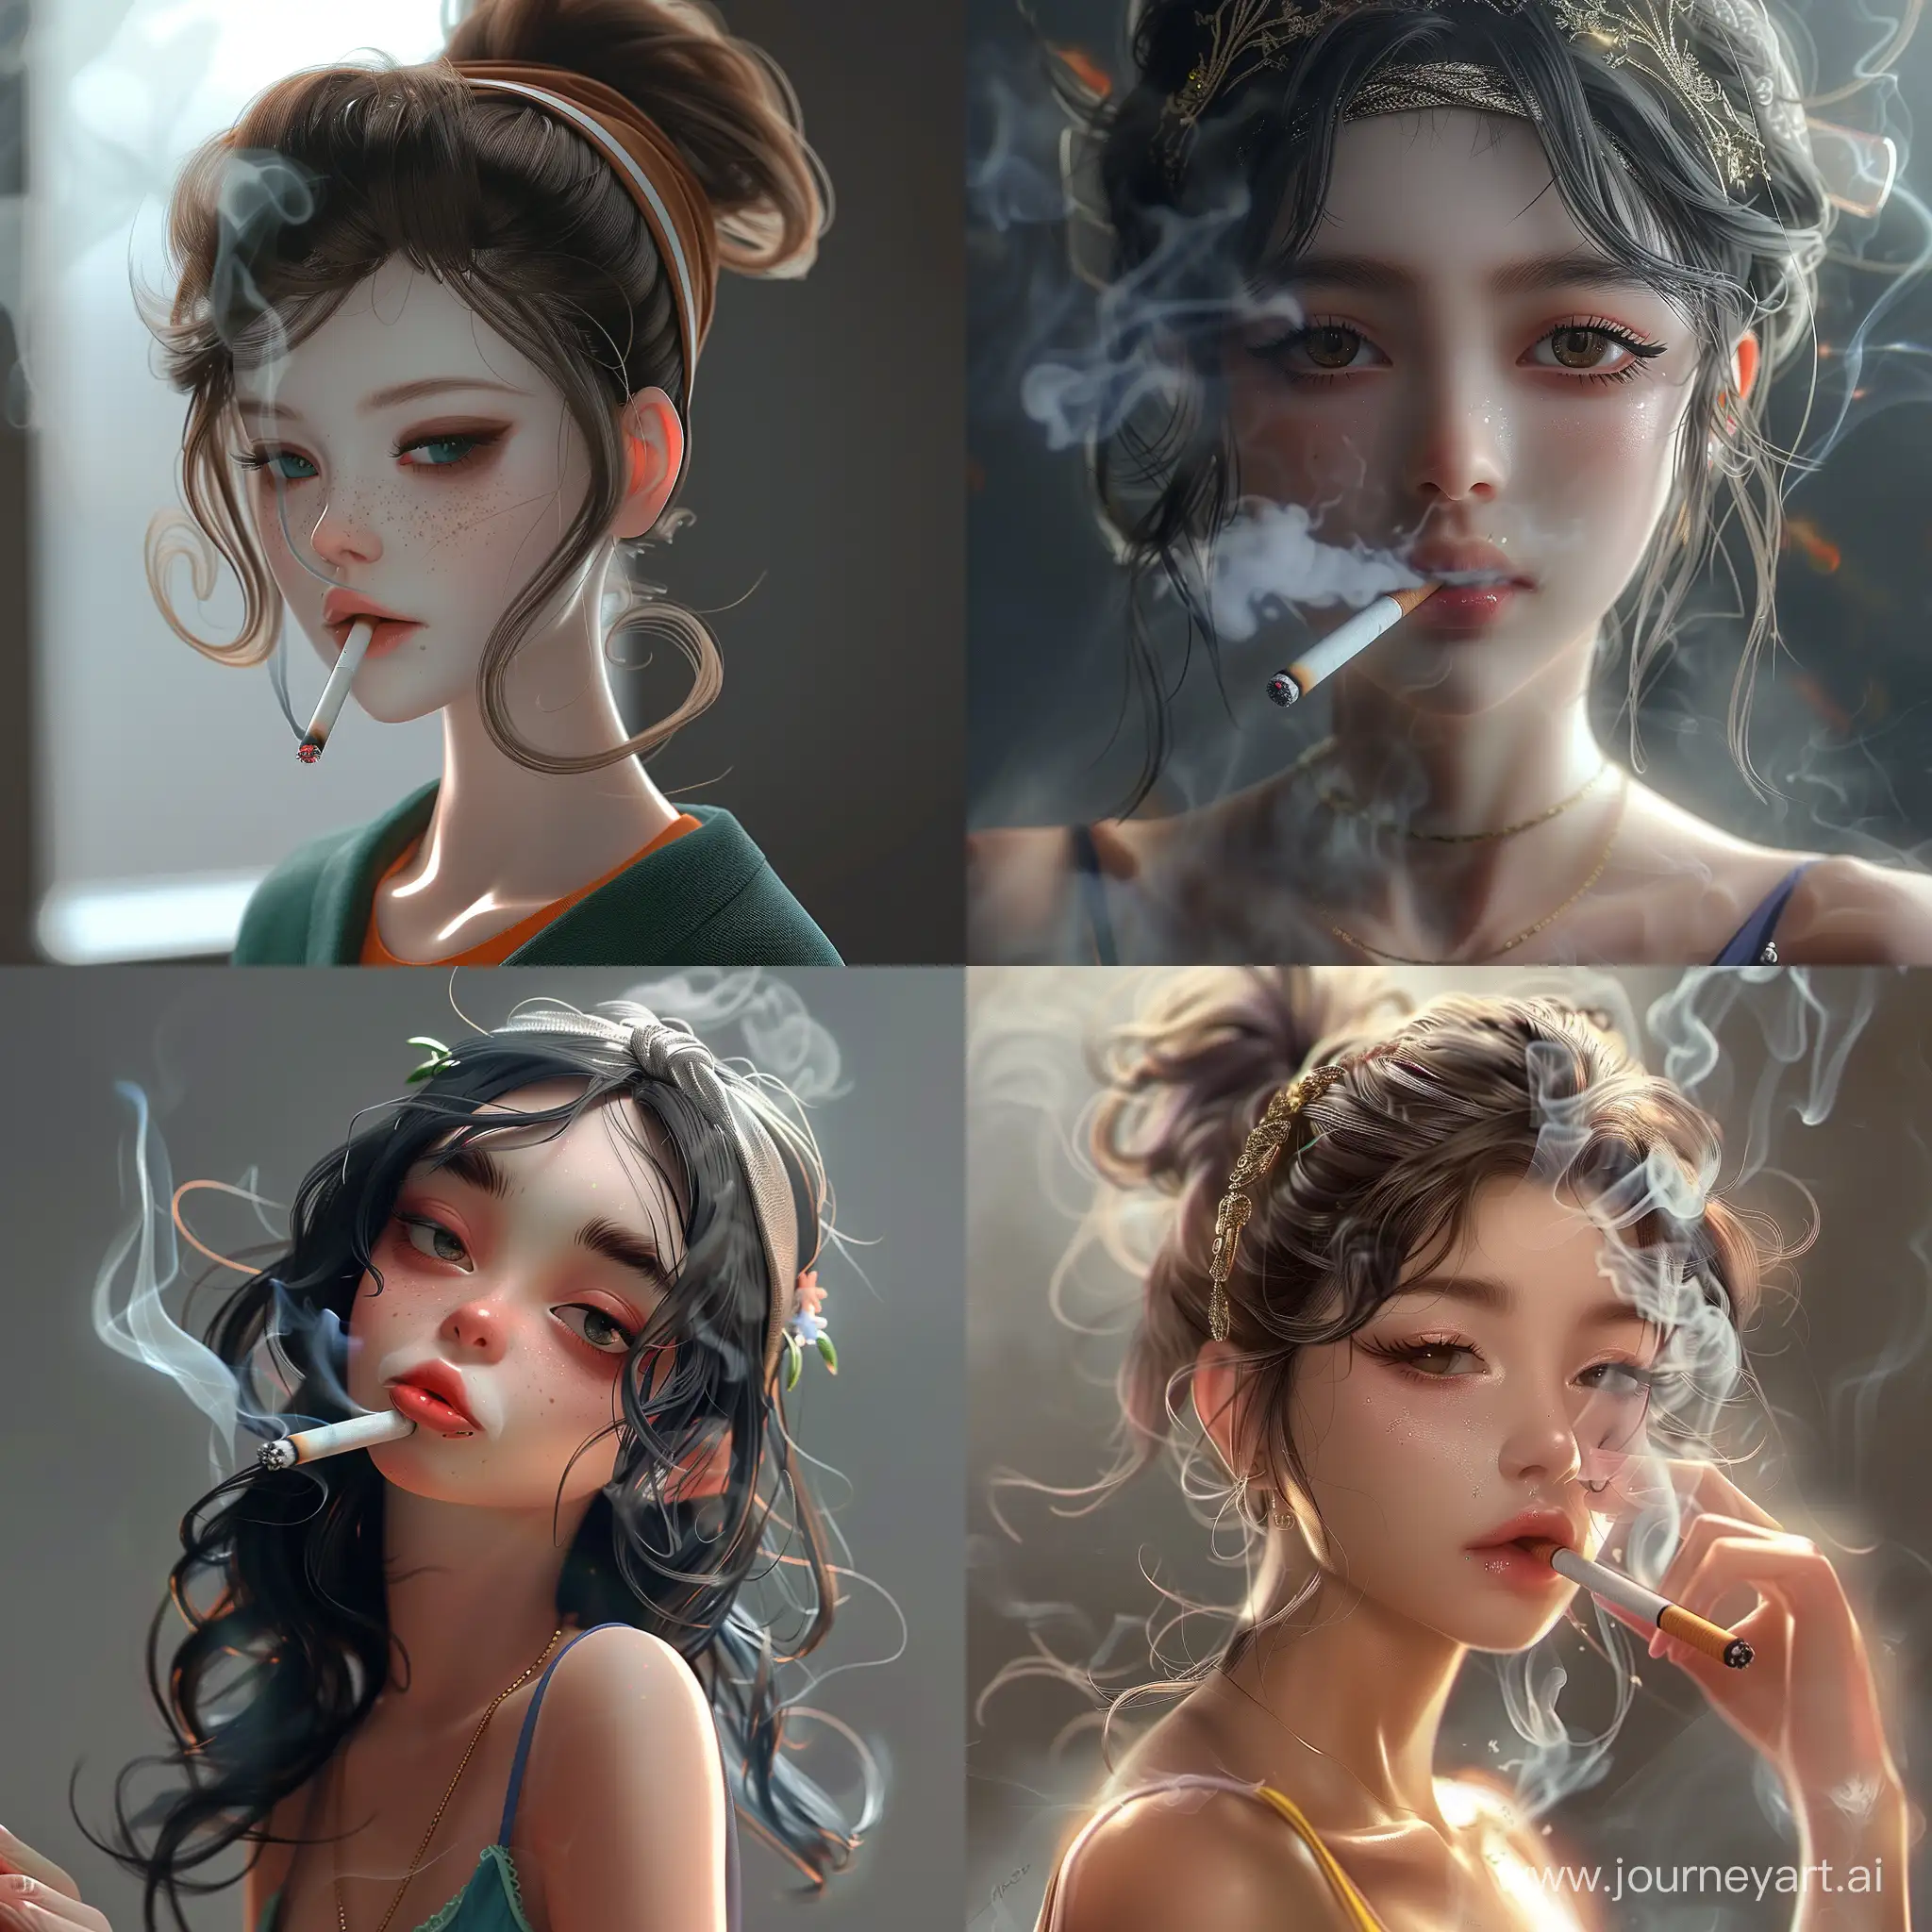 Elegant-Anime-Girl-Smoking-with-Headband-in-3D-Style